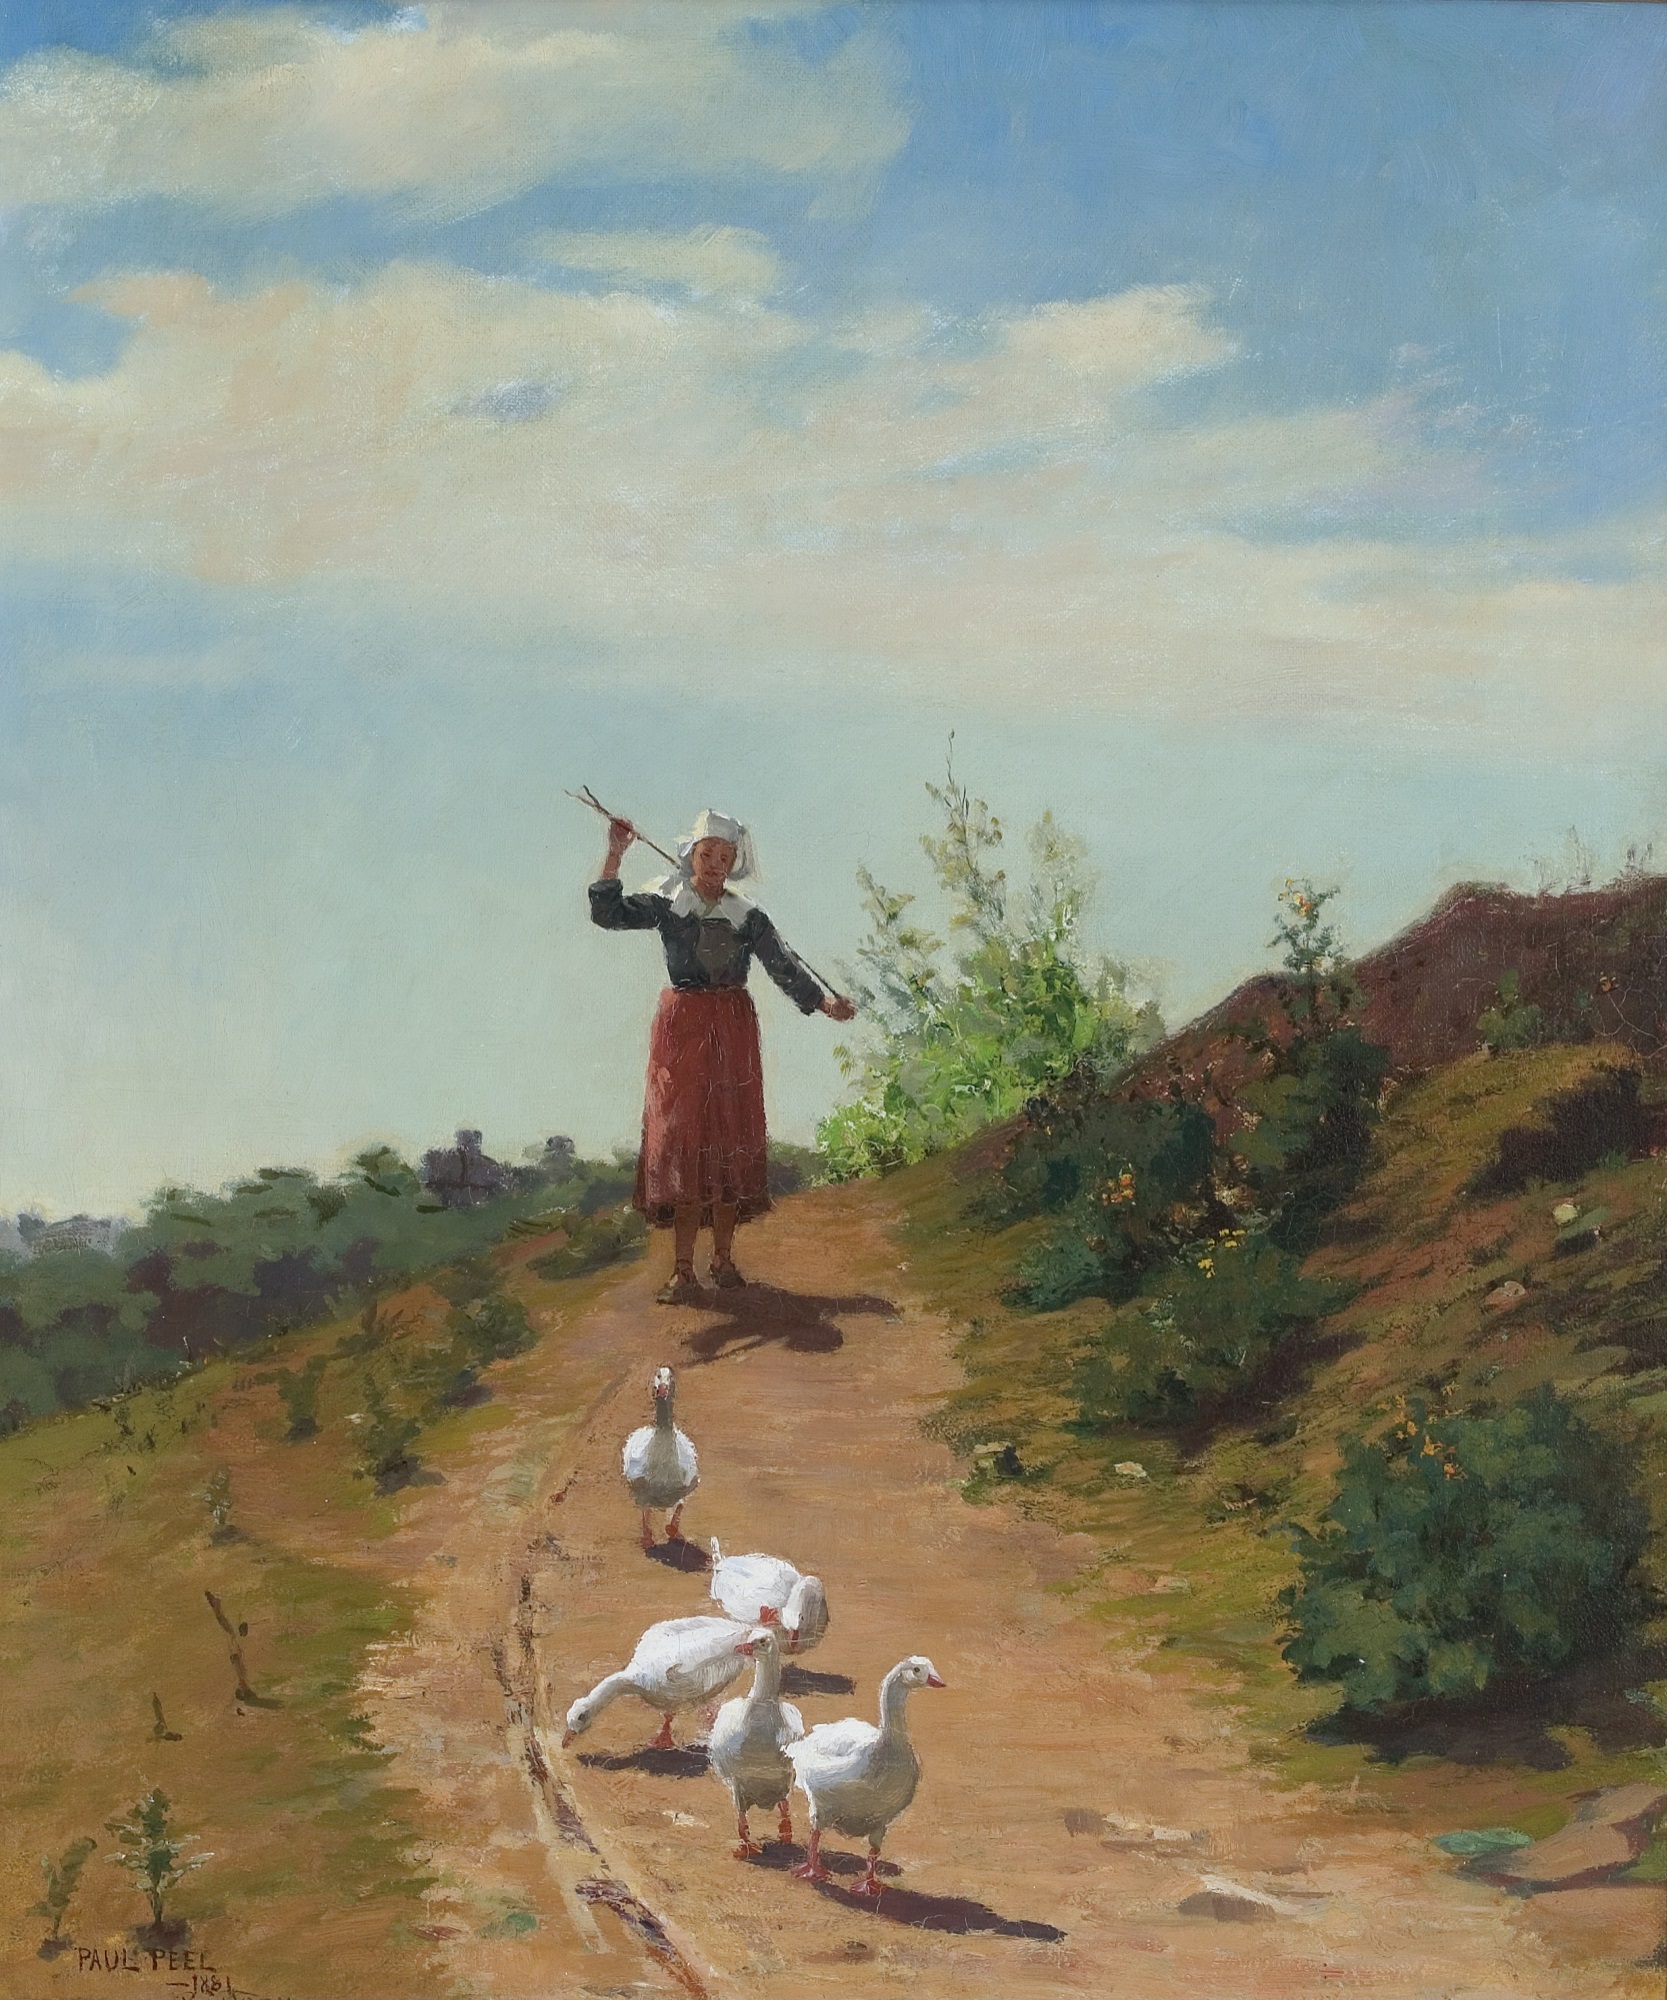 Paul Peel - Bringing home the flock (1881)